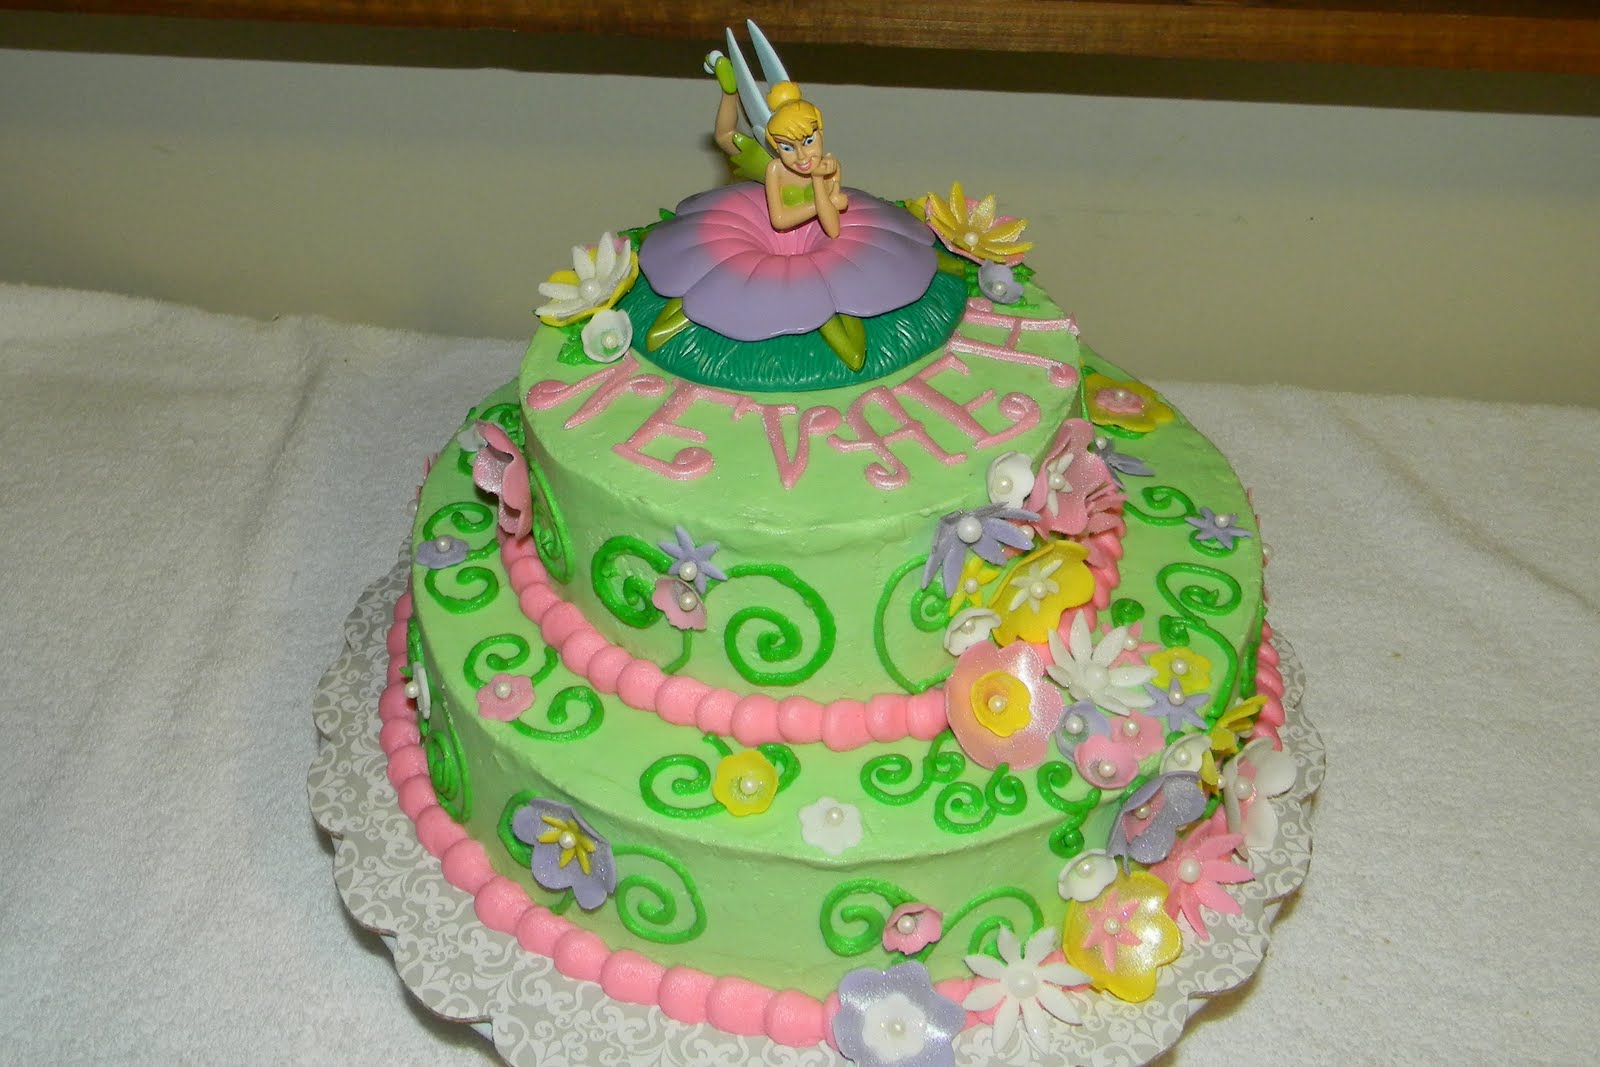 Custom Cakes by Christy: February 2011